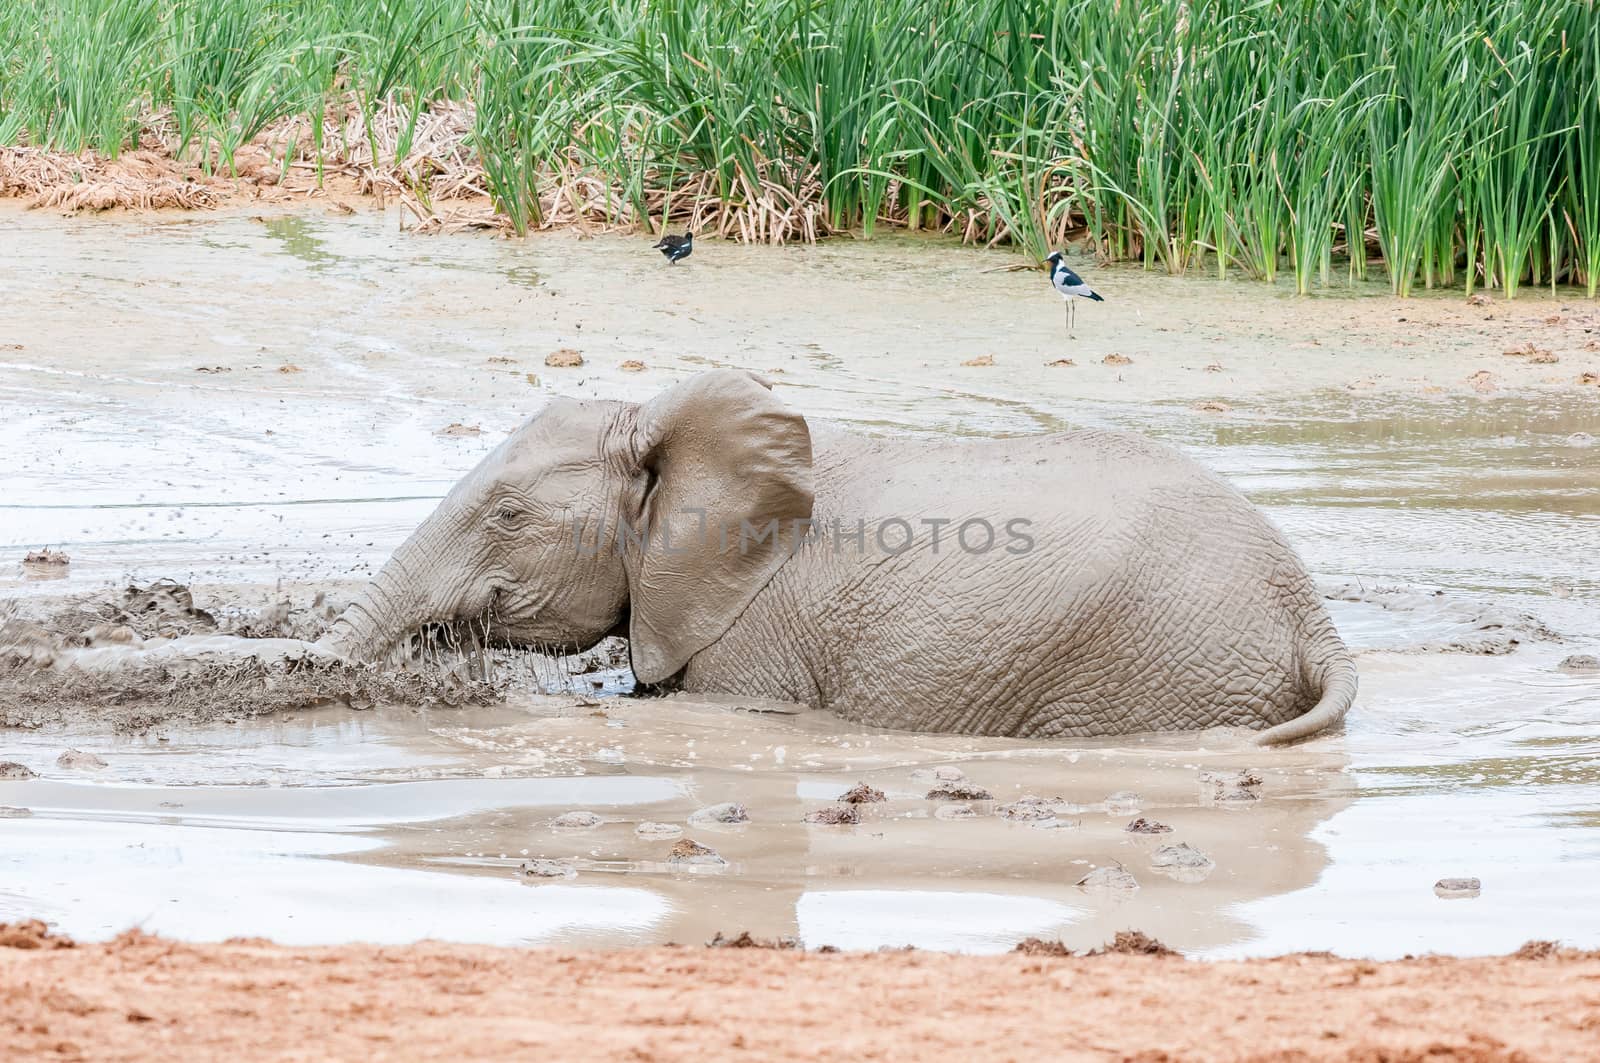 An African elephant calf, Loxodonta africana, playing in a muddy waterhole